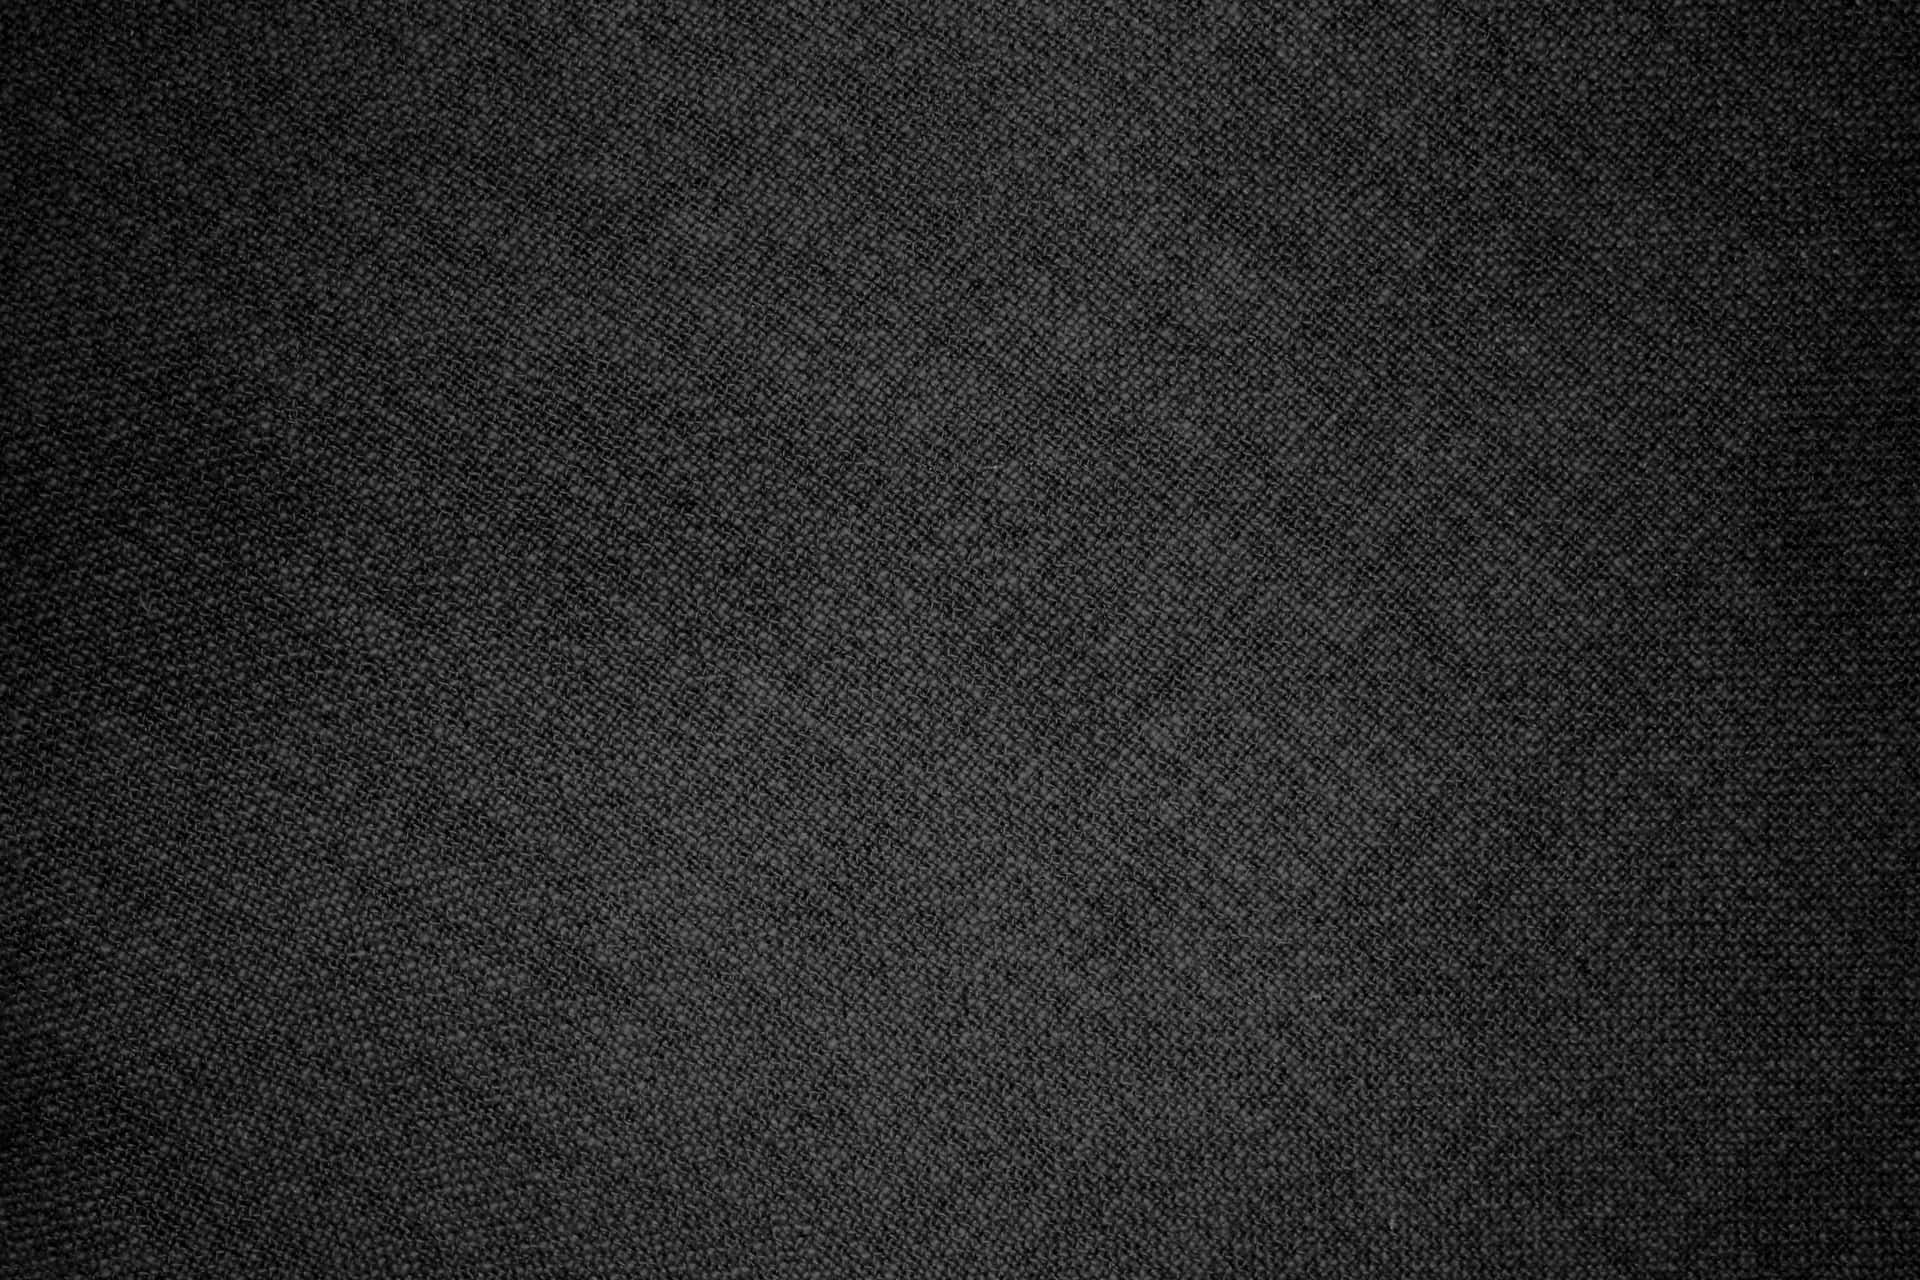 Black Denim Fabric With Texture Wallpaper